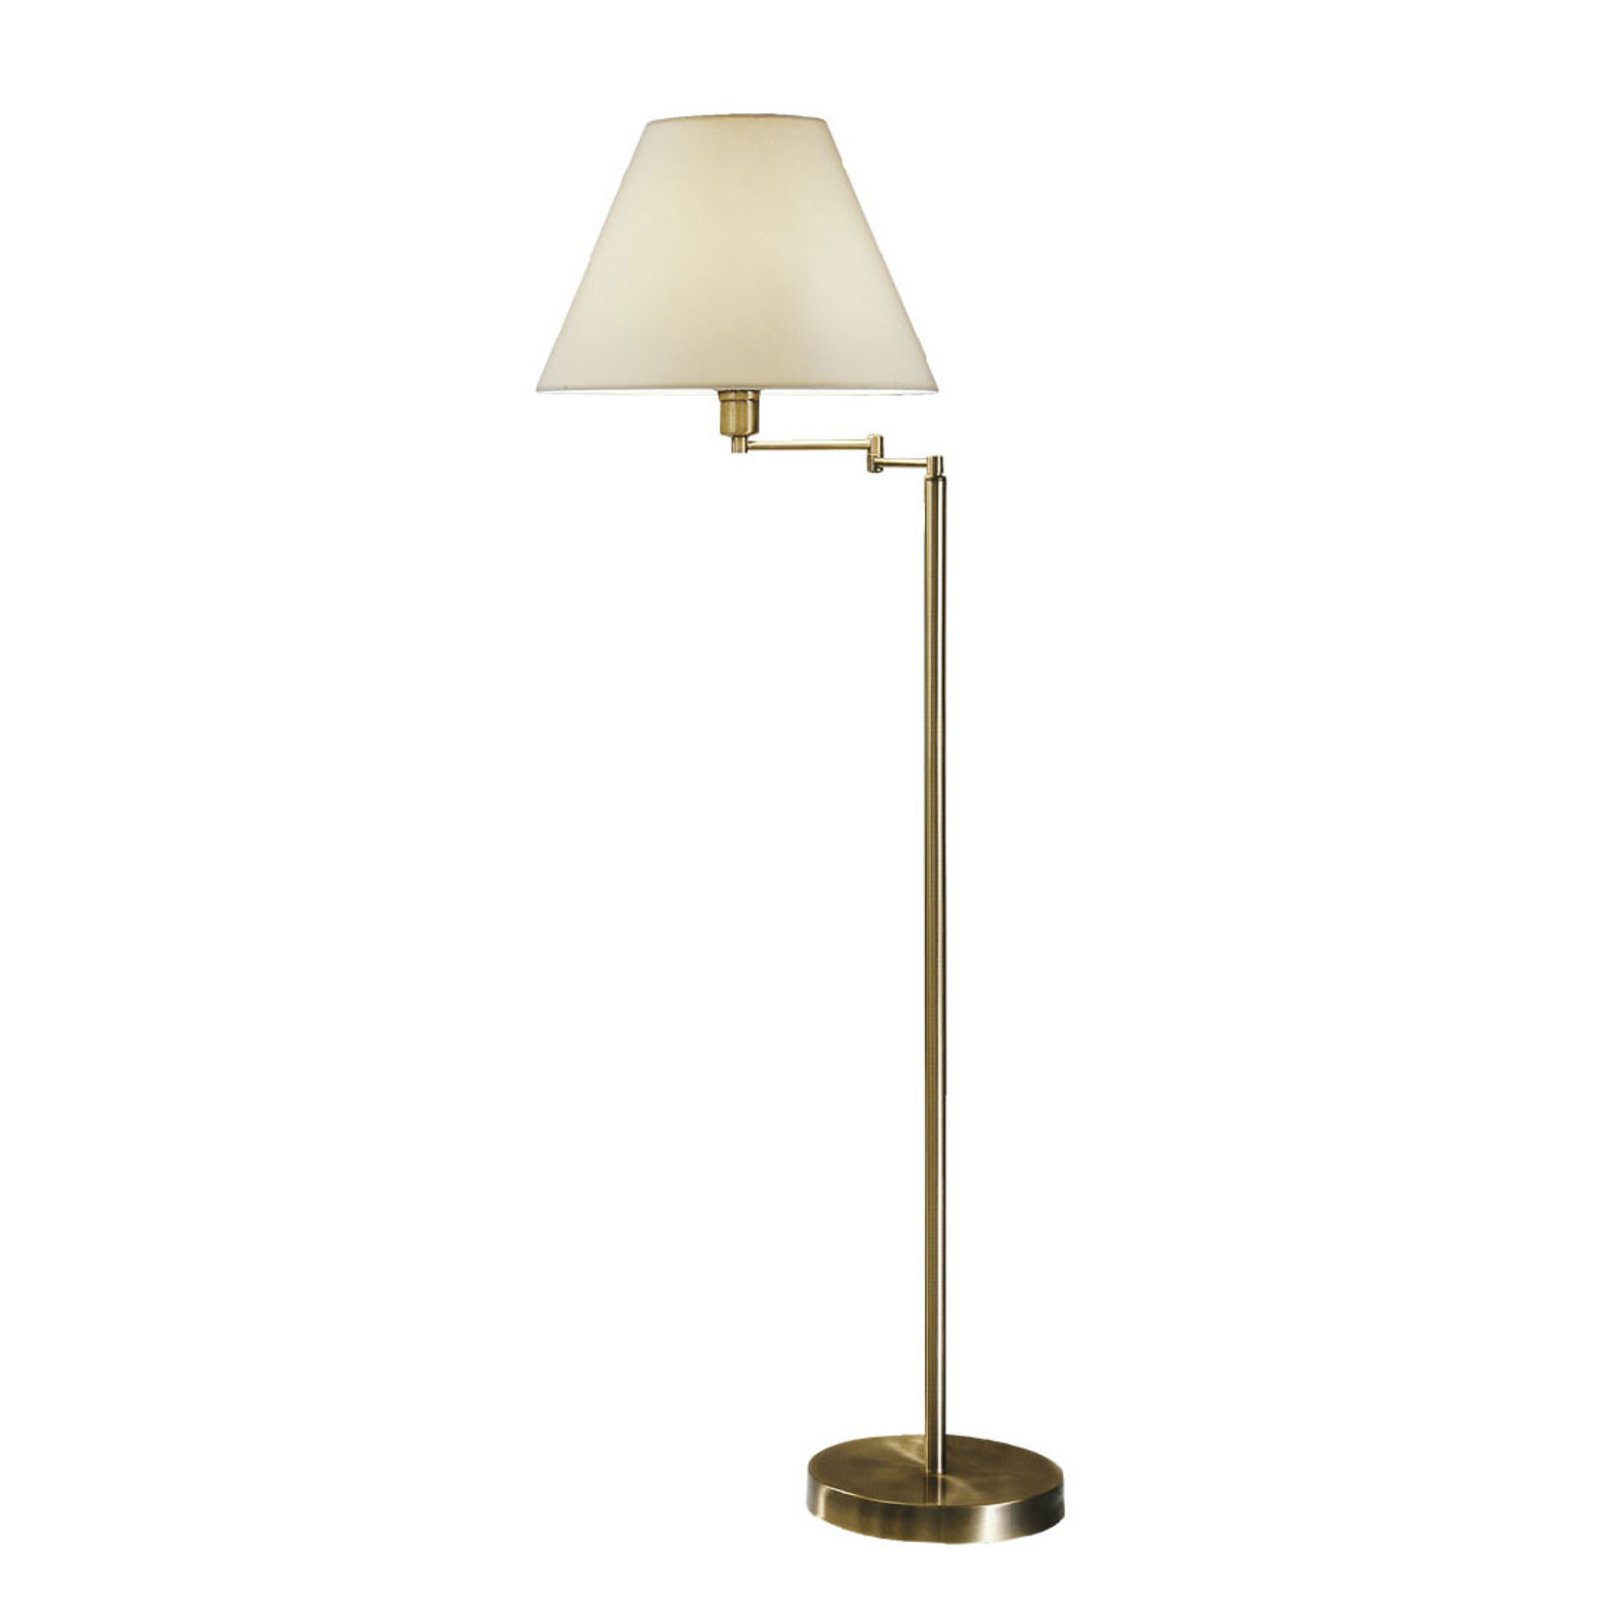 Hilton floor lamp, white lampshade, antique brass